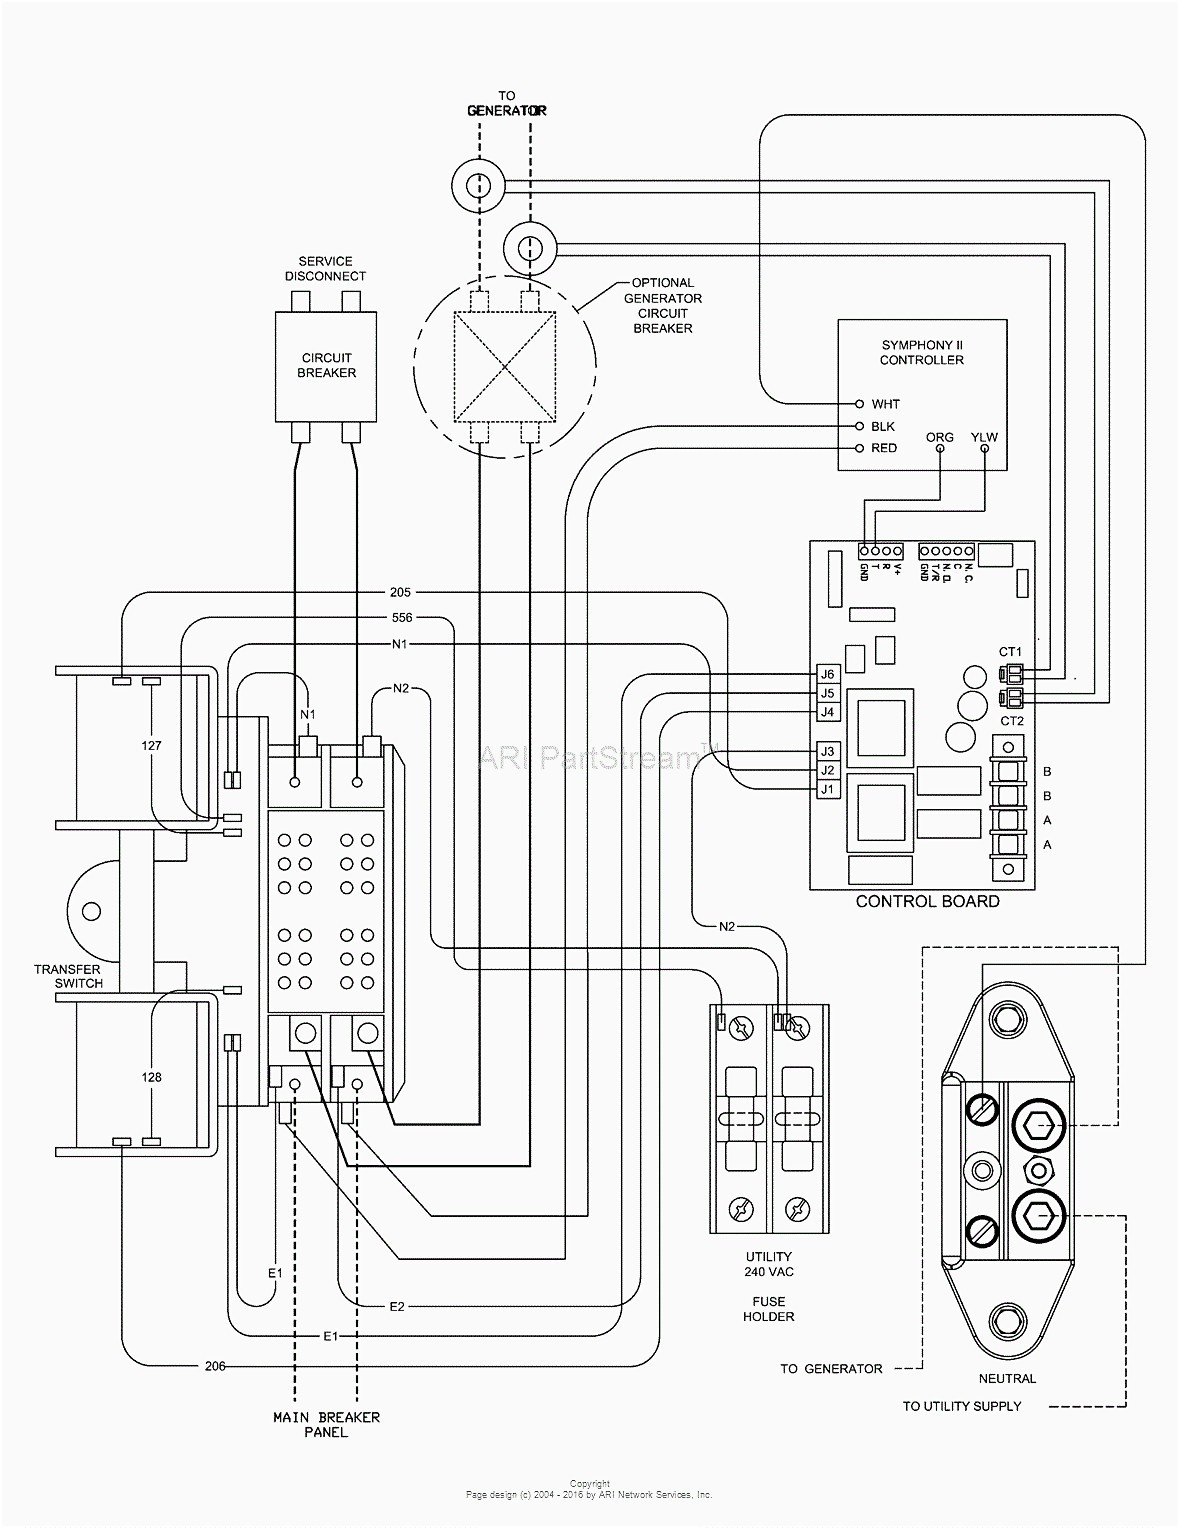 Generac Generator Transfer Switch Wiring Diagram Generator Automatic Transfer Switch Wiring Diagram Generac with Fancy